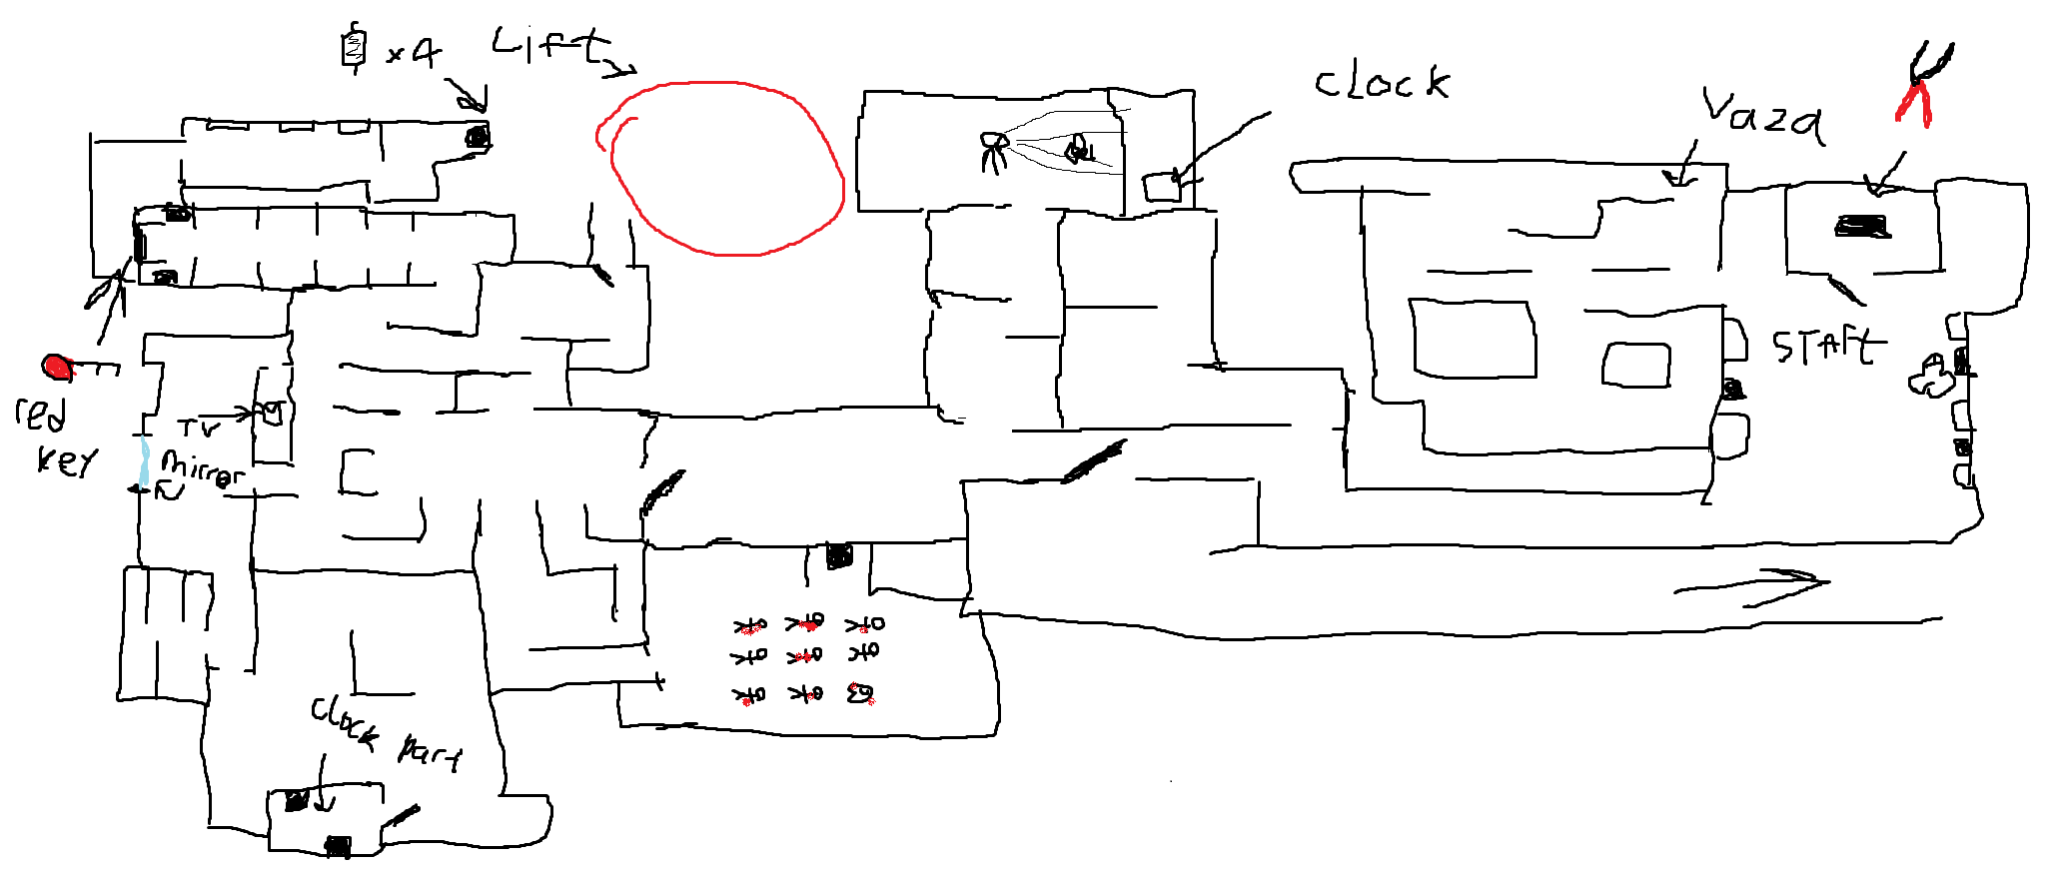 Inside the Backrooms Level 1 Map 